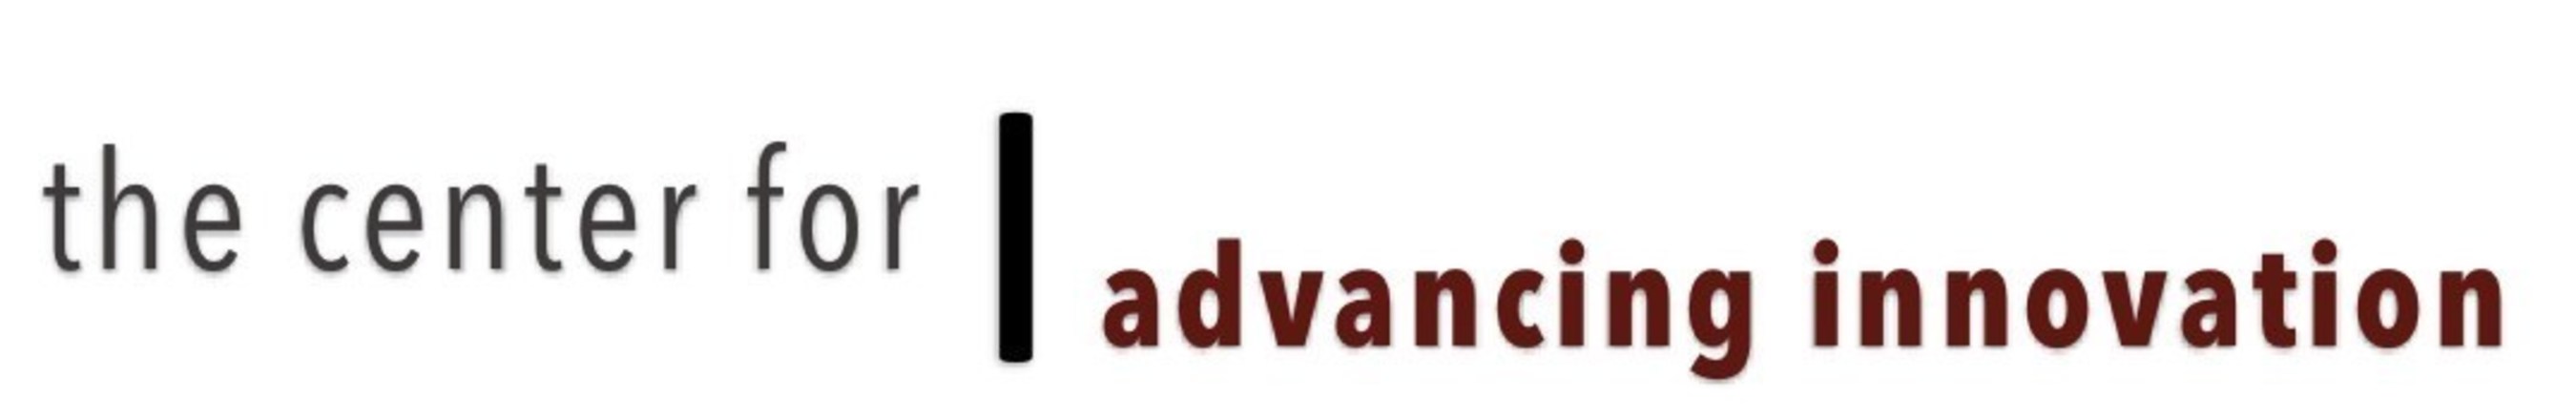 the center for advancing innovation logo (PRNewsFoto/Heritage Provider Network)